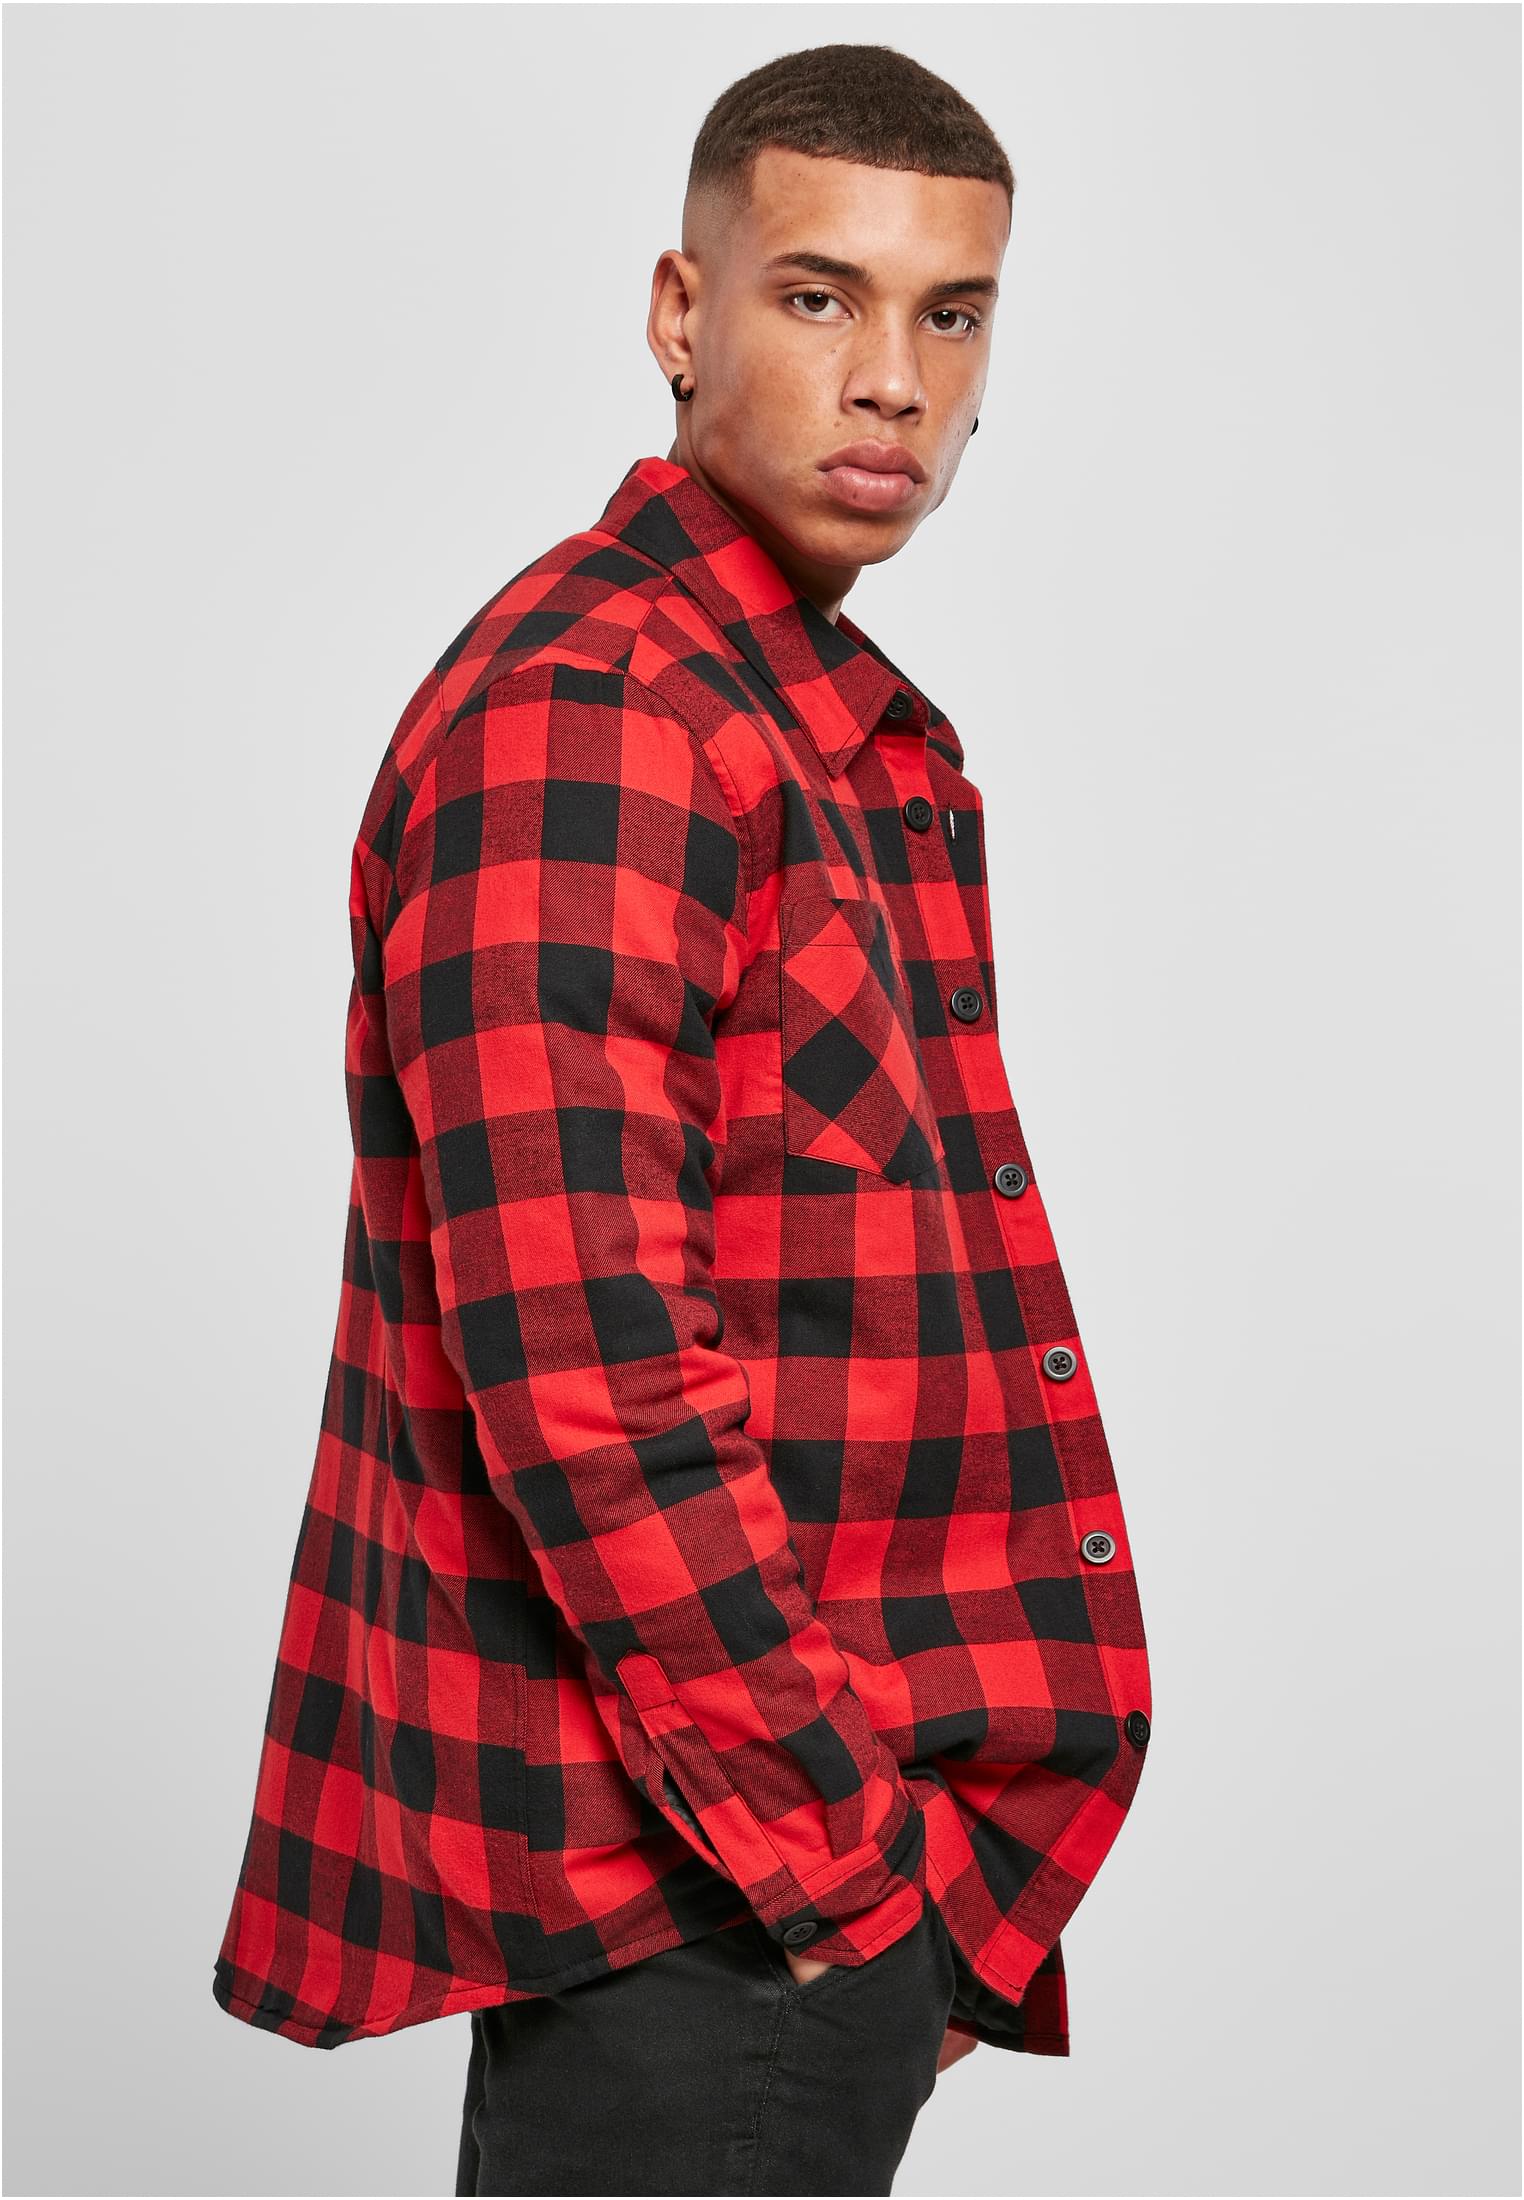 Hemden Padded Check Flannel Shirt in Farbe black/red